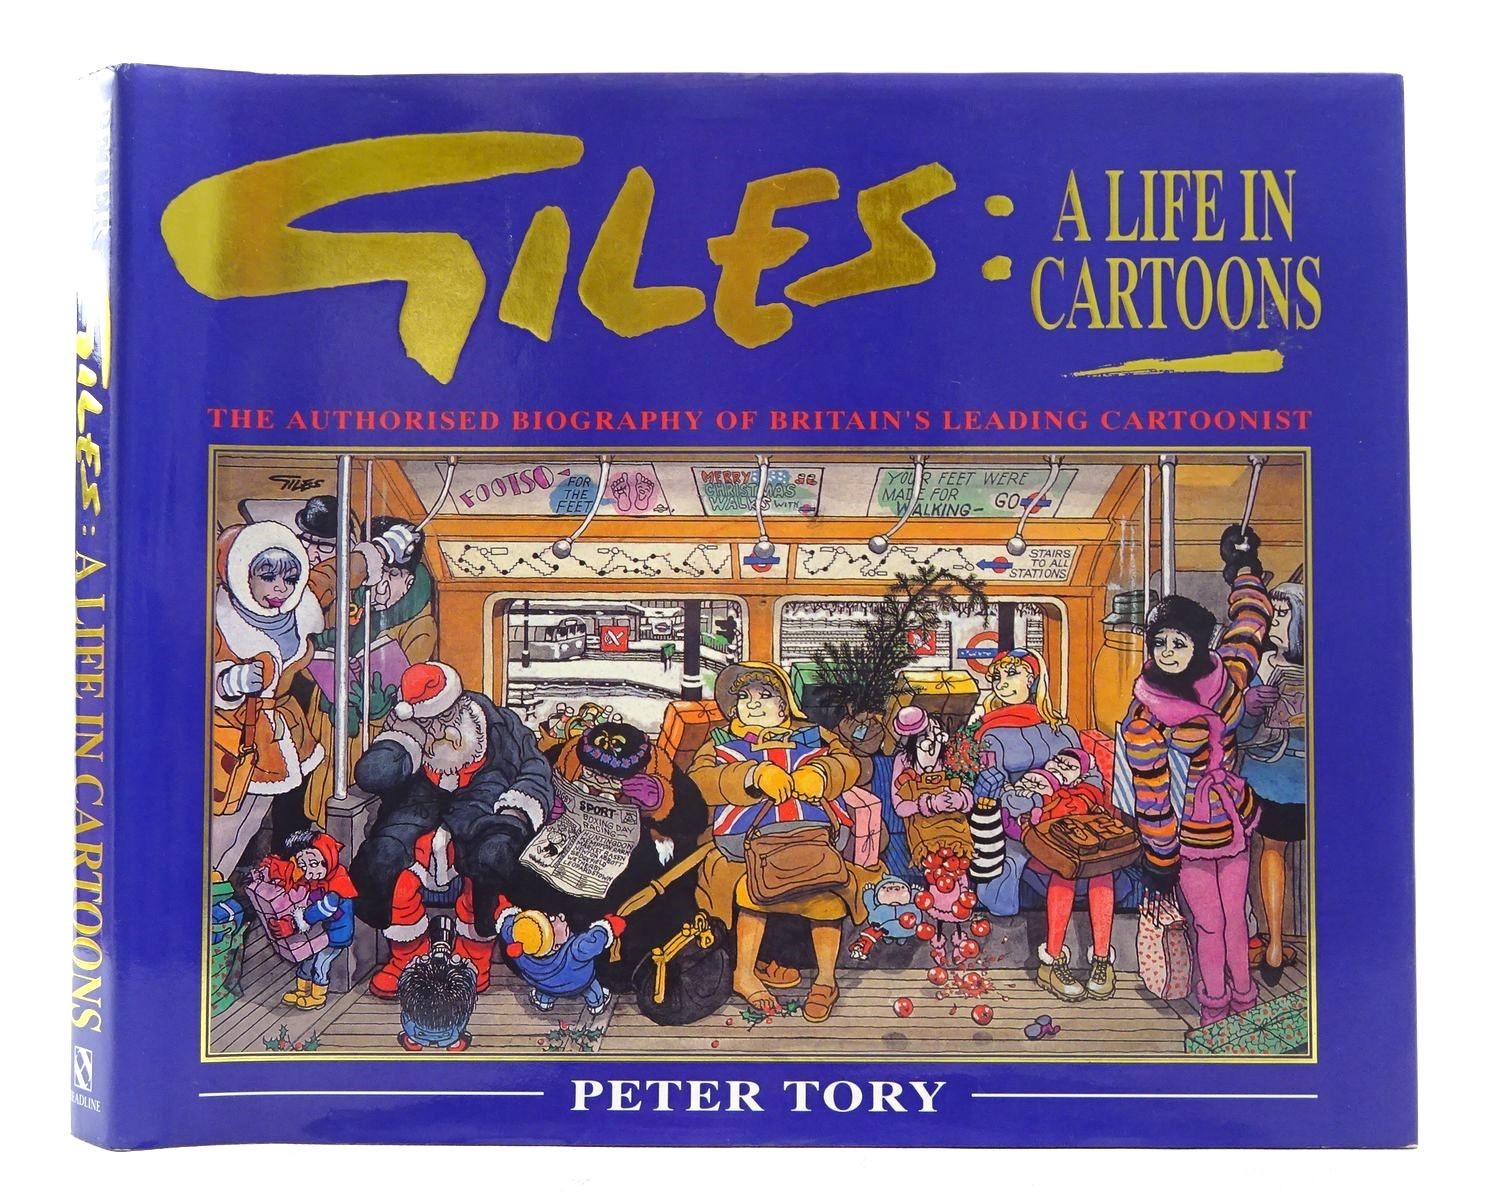 Giles - A Life in Cartoons